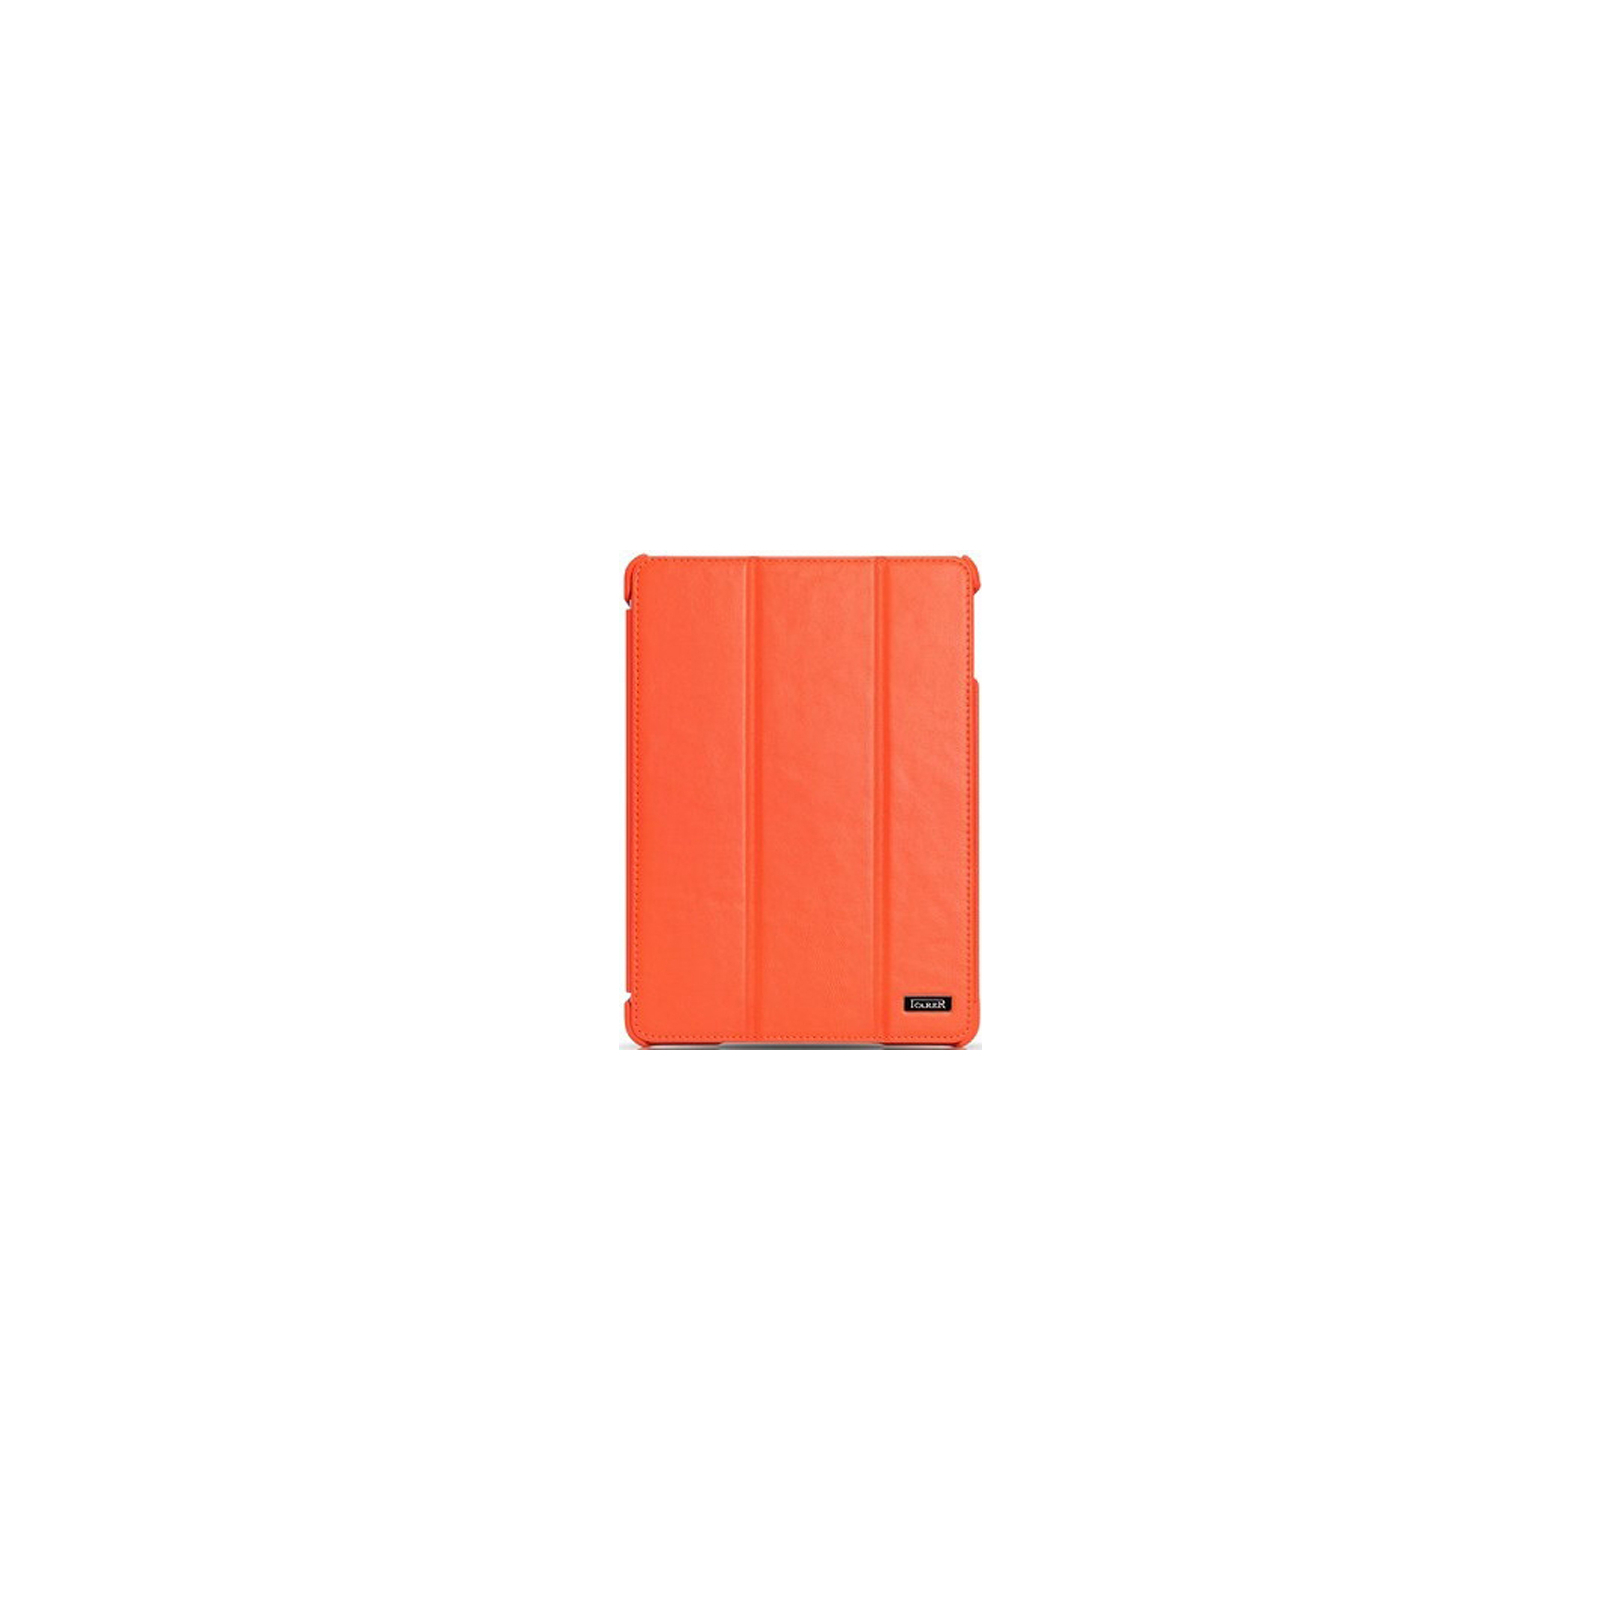 Чехол для планшета i-Carer iPad Air Ultra thin genuine leather series orange (RID501or)